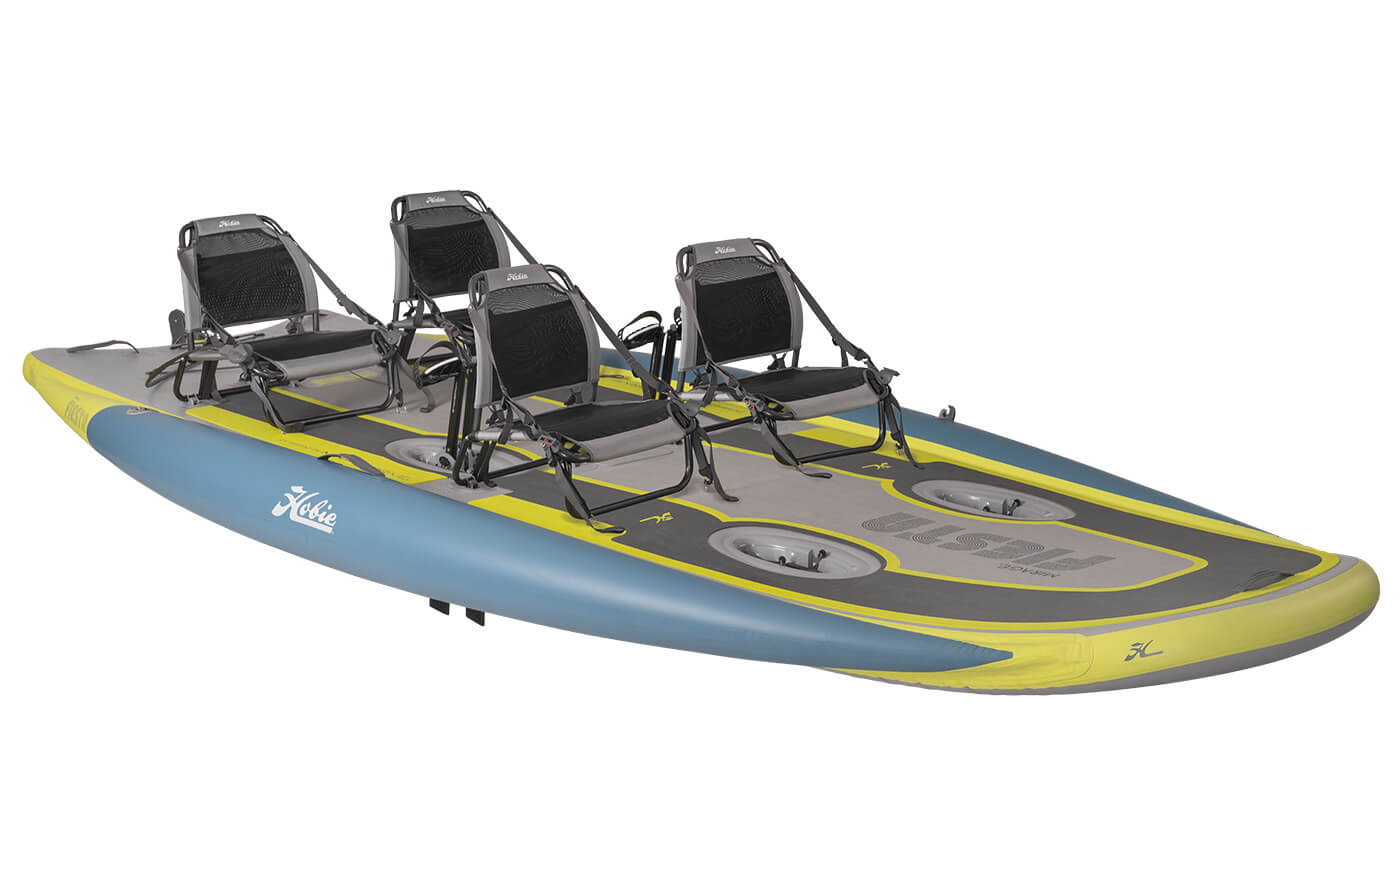 iTrek 11 Kayak, Hobie, Inflatable, Mirage Drive